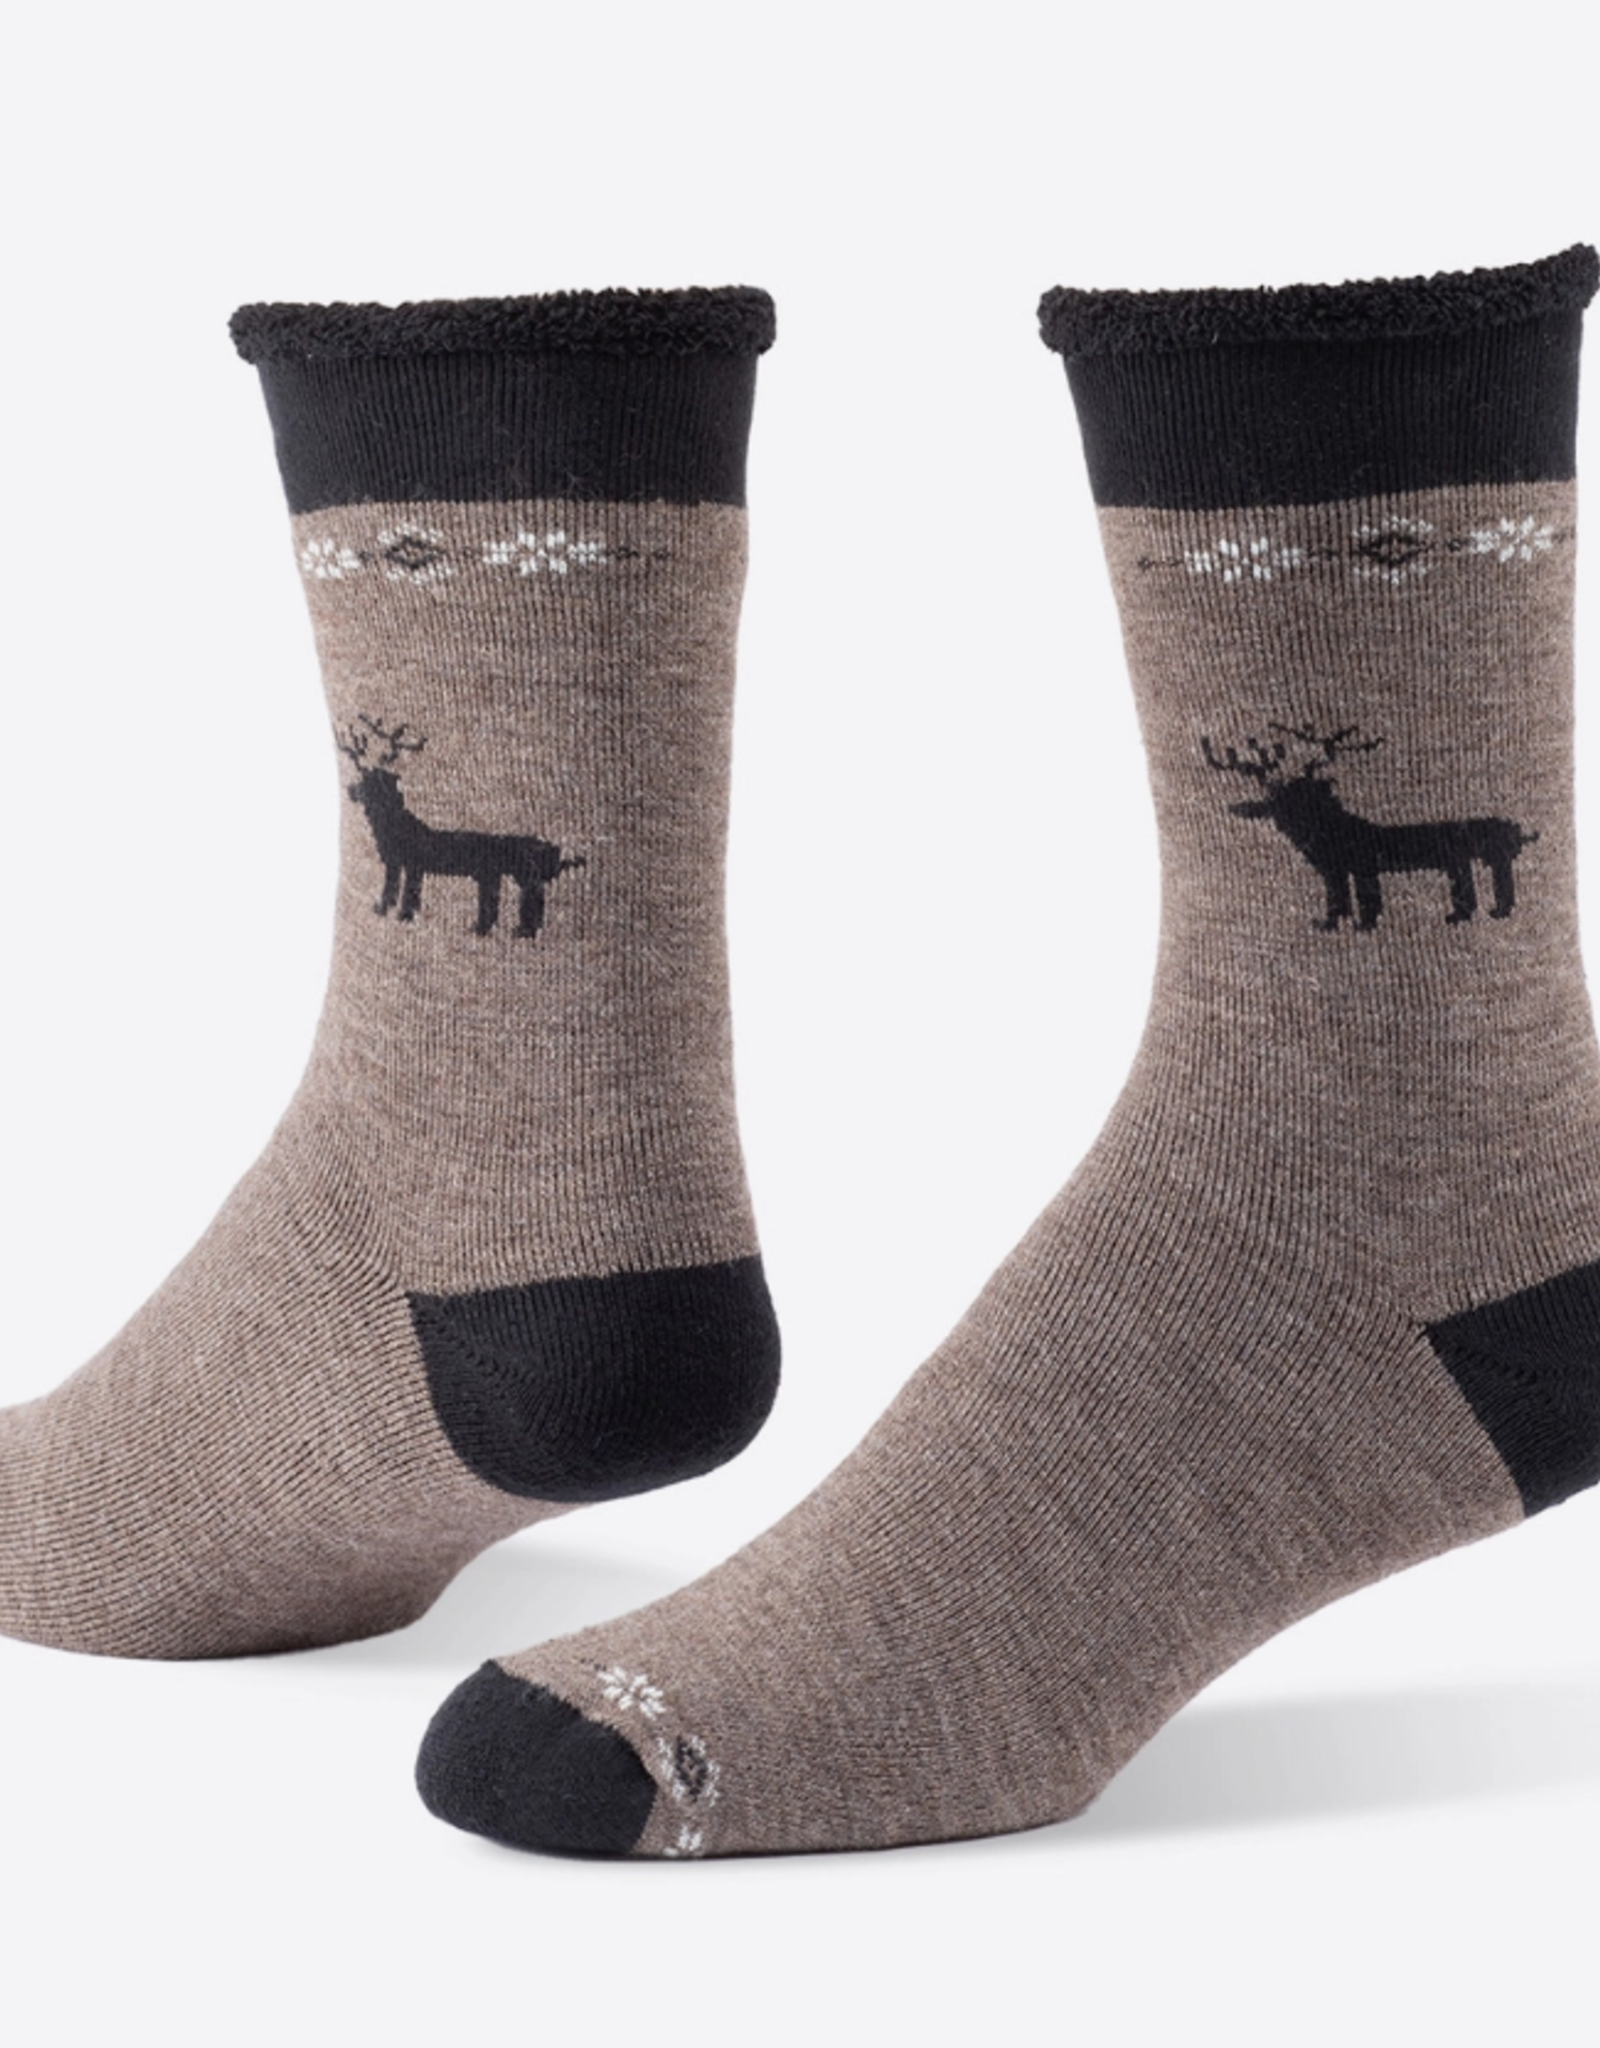 Maggie's Organics Snuggle Socks - Reindeer Dove